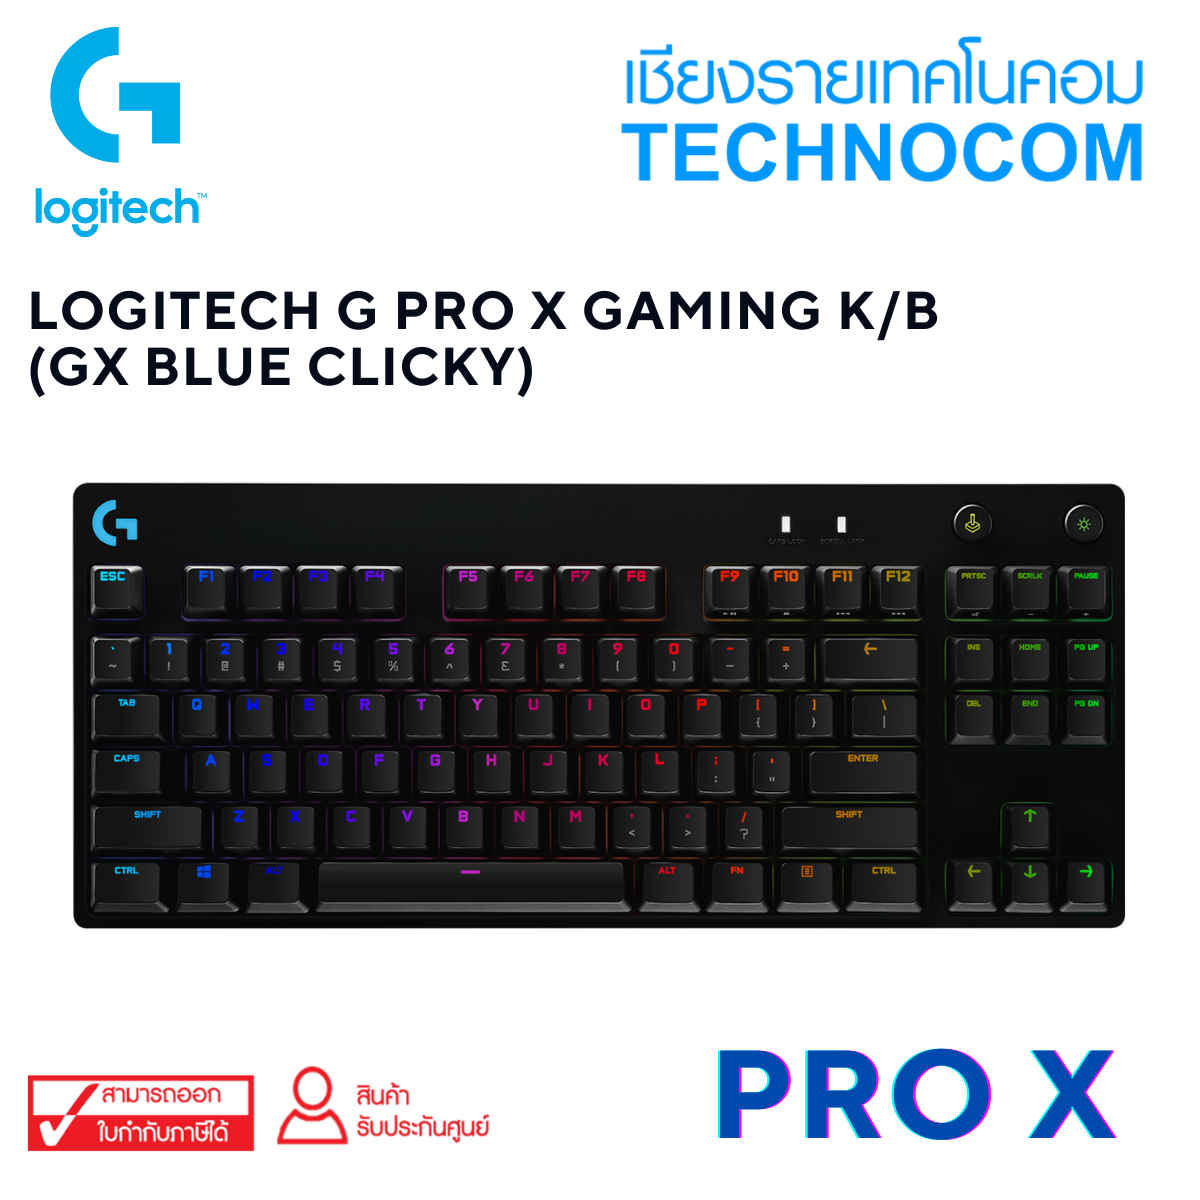 LOGITECH G PRO X GAMING K/B (GX BLUE CLICKY)